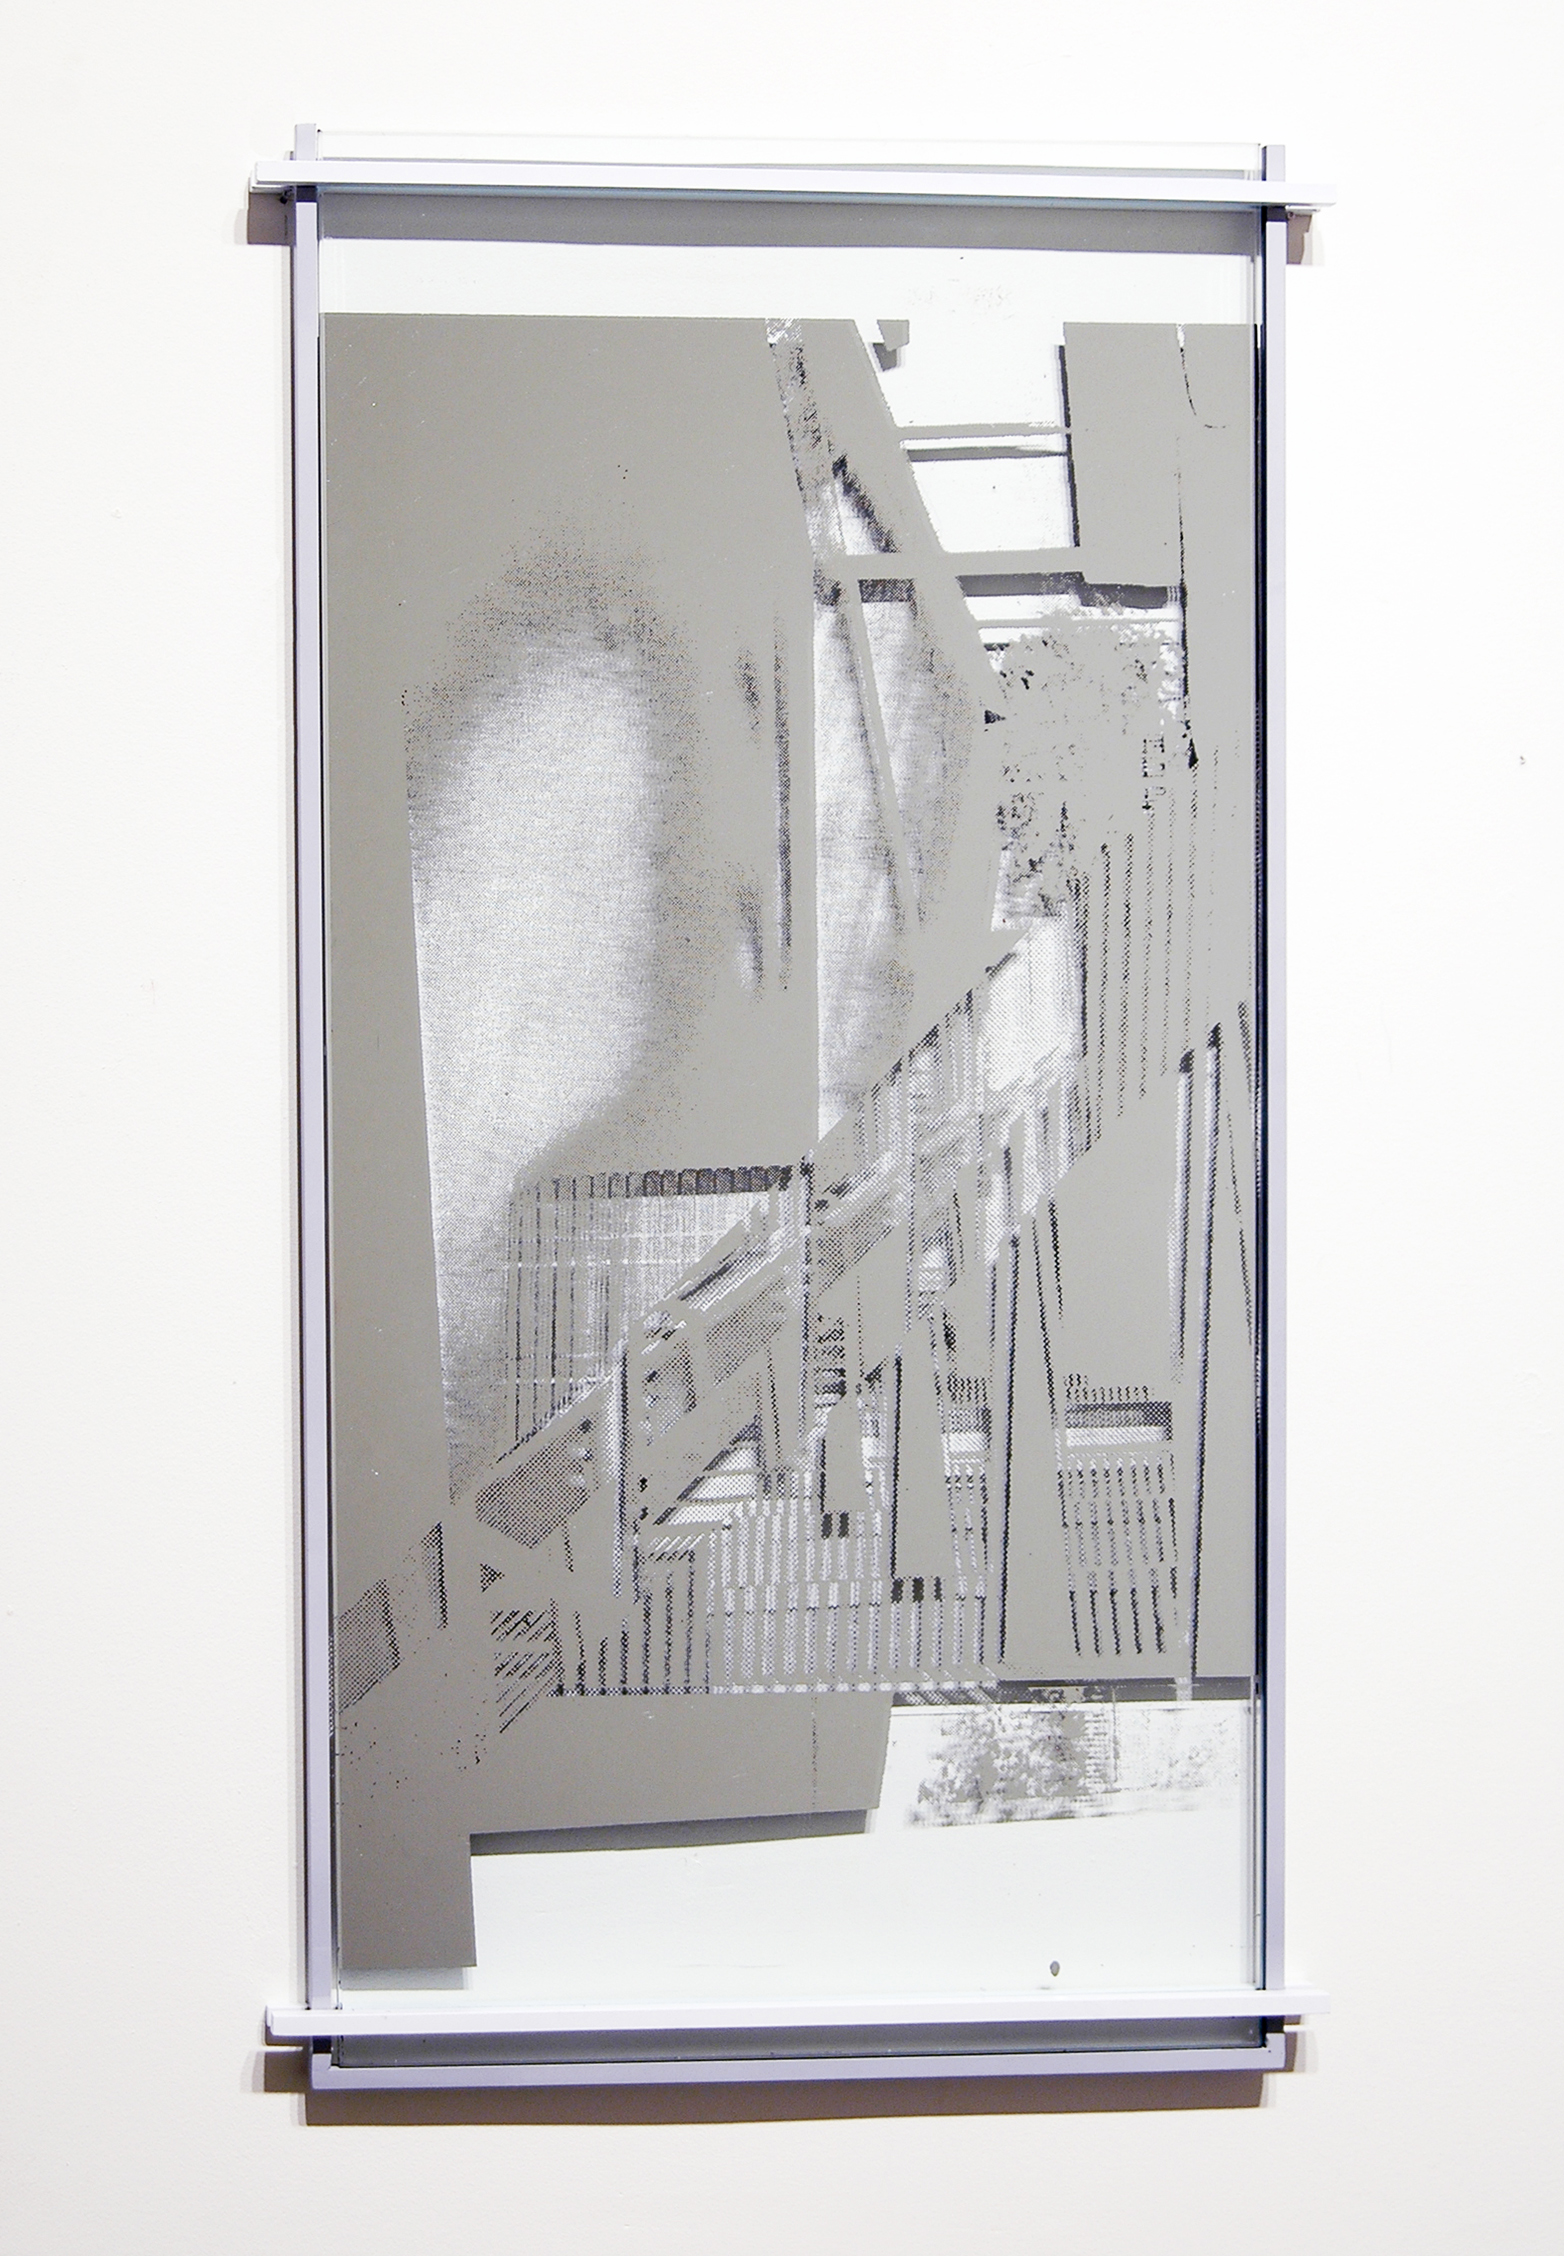   JONATHAN RUNCIO   Untitled , mirror, screen-print, steel and paint, 24.5" x 13.75", 2013 